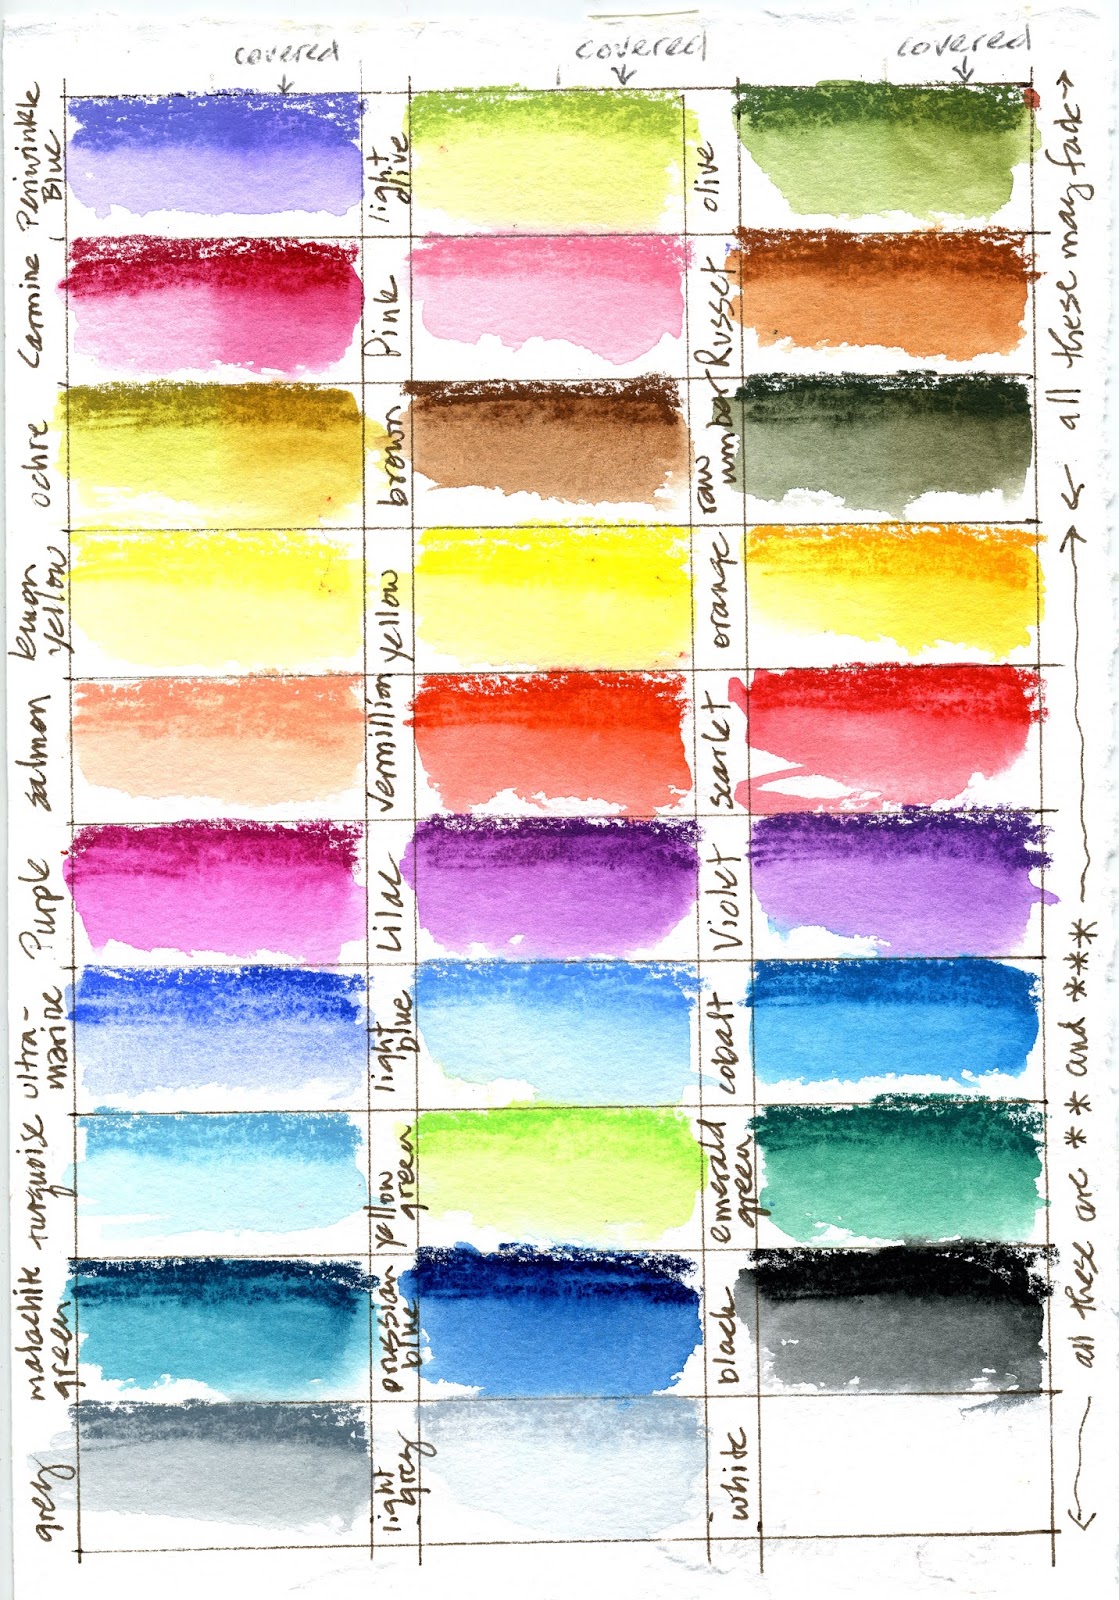 Caran D'Ache Classic Neocolor I, 10 Assorted Colors - Artist & Craftsman  Supply